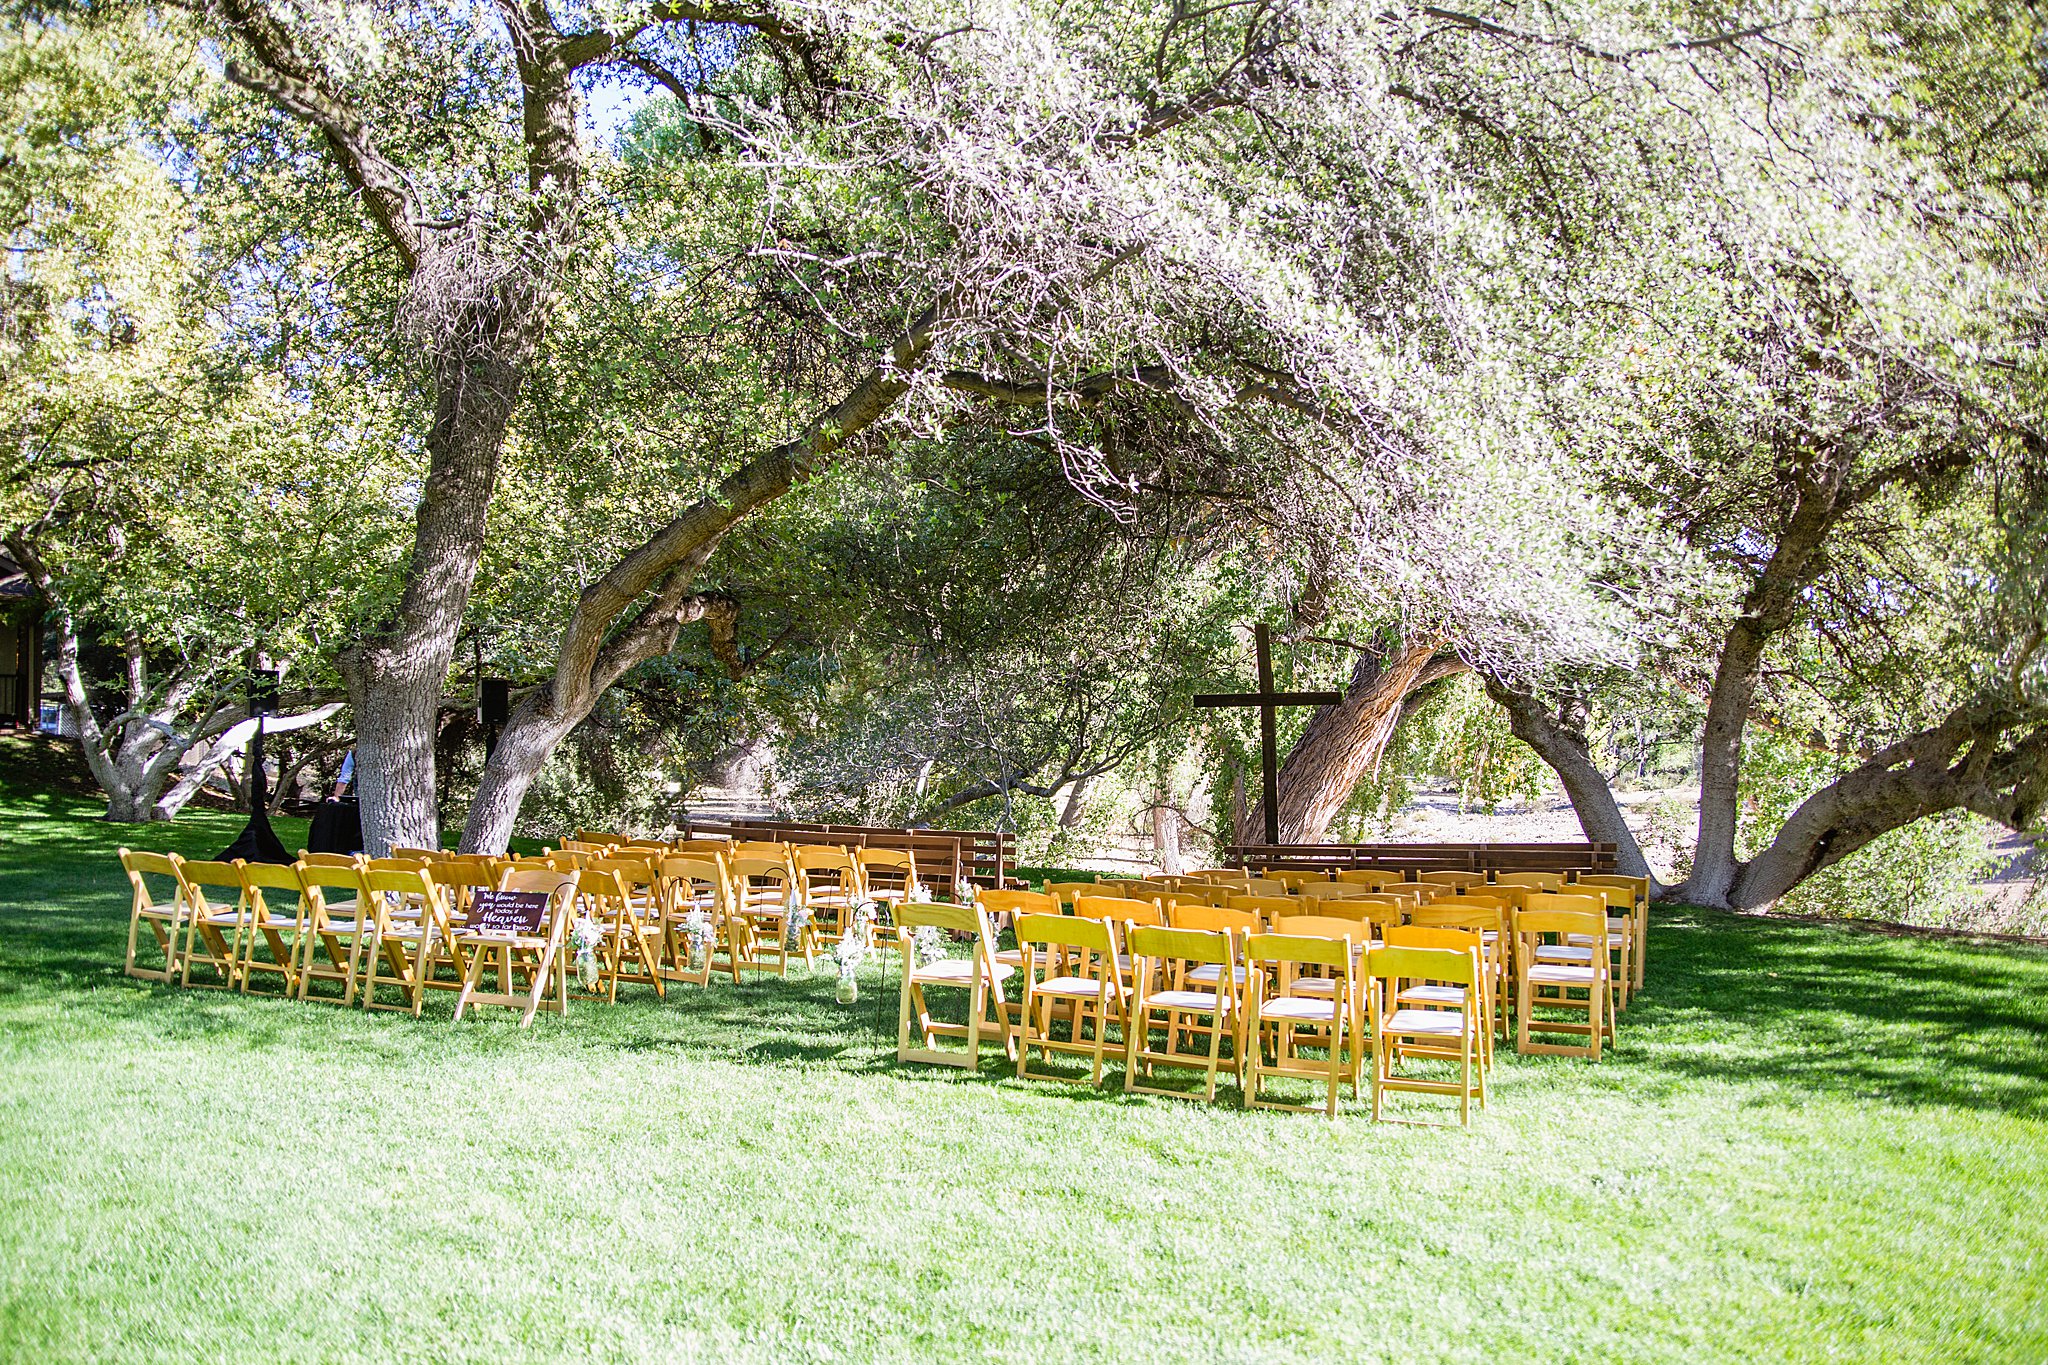 Wedding ceremony at Van Dickson Ranch by Arizona wedding photographer PMA Photography.